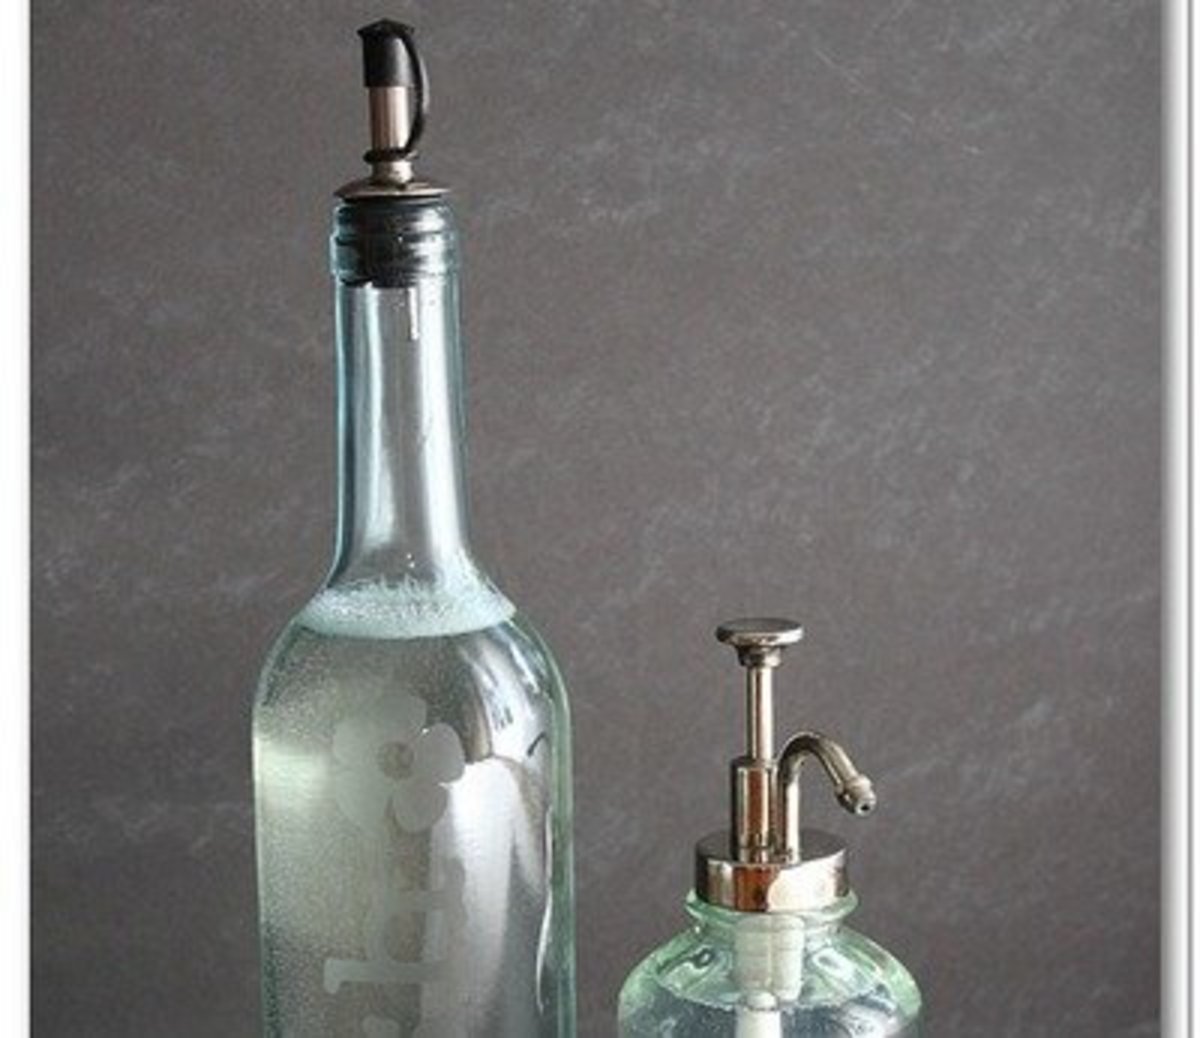 diy-super-creative-wine-bottle-craft-ideas